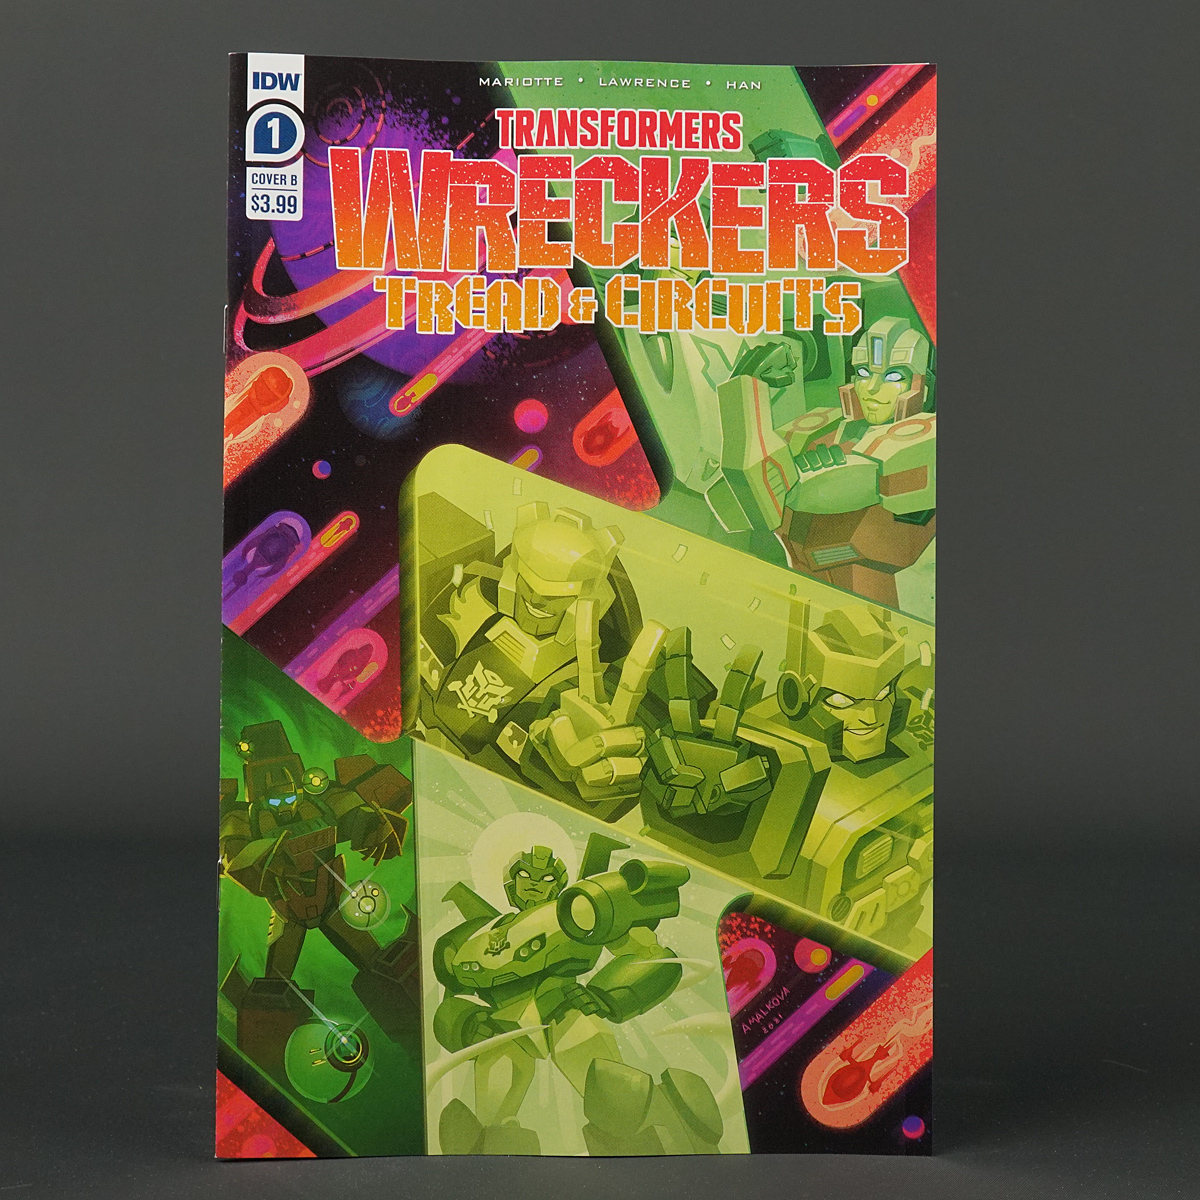 Transformers Wreckers TREAD & CIRCUITS #1 Cvr B IDW Comics 2021 AUG210538 1B